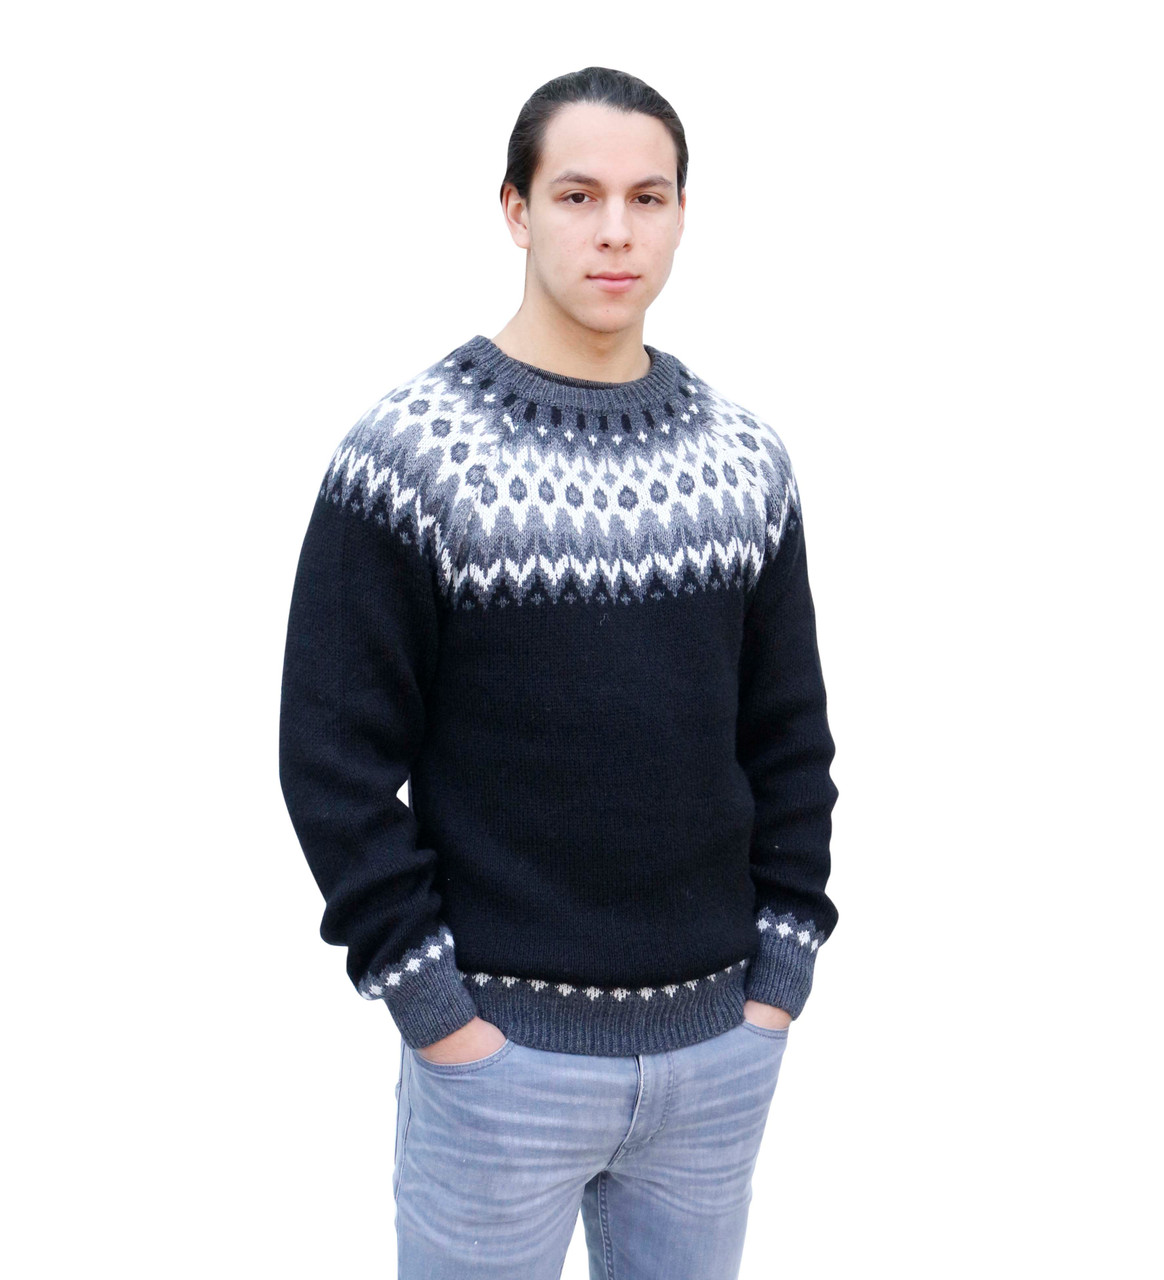 INTI ALPACA Thick Handmade sweater for Men in Blue Alpaca Wool - Winter  Crewneck Pullover - Chunky Knit Sweater